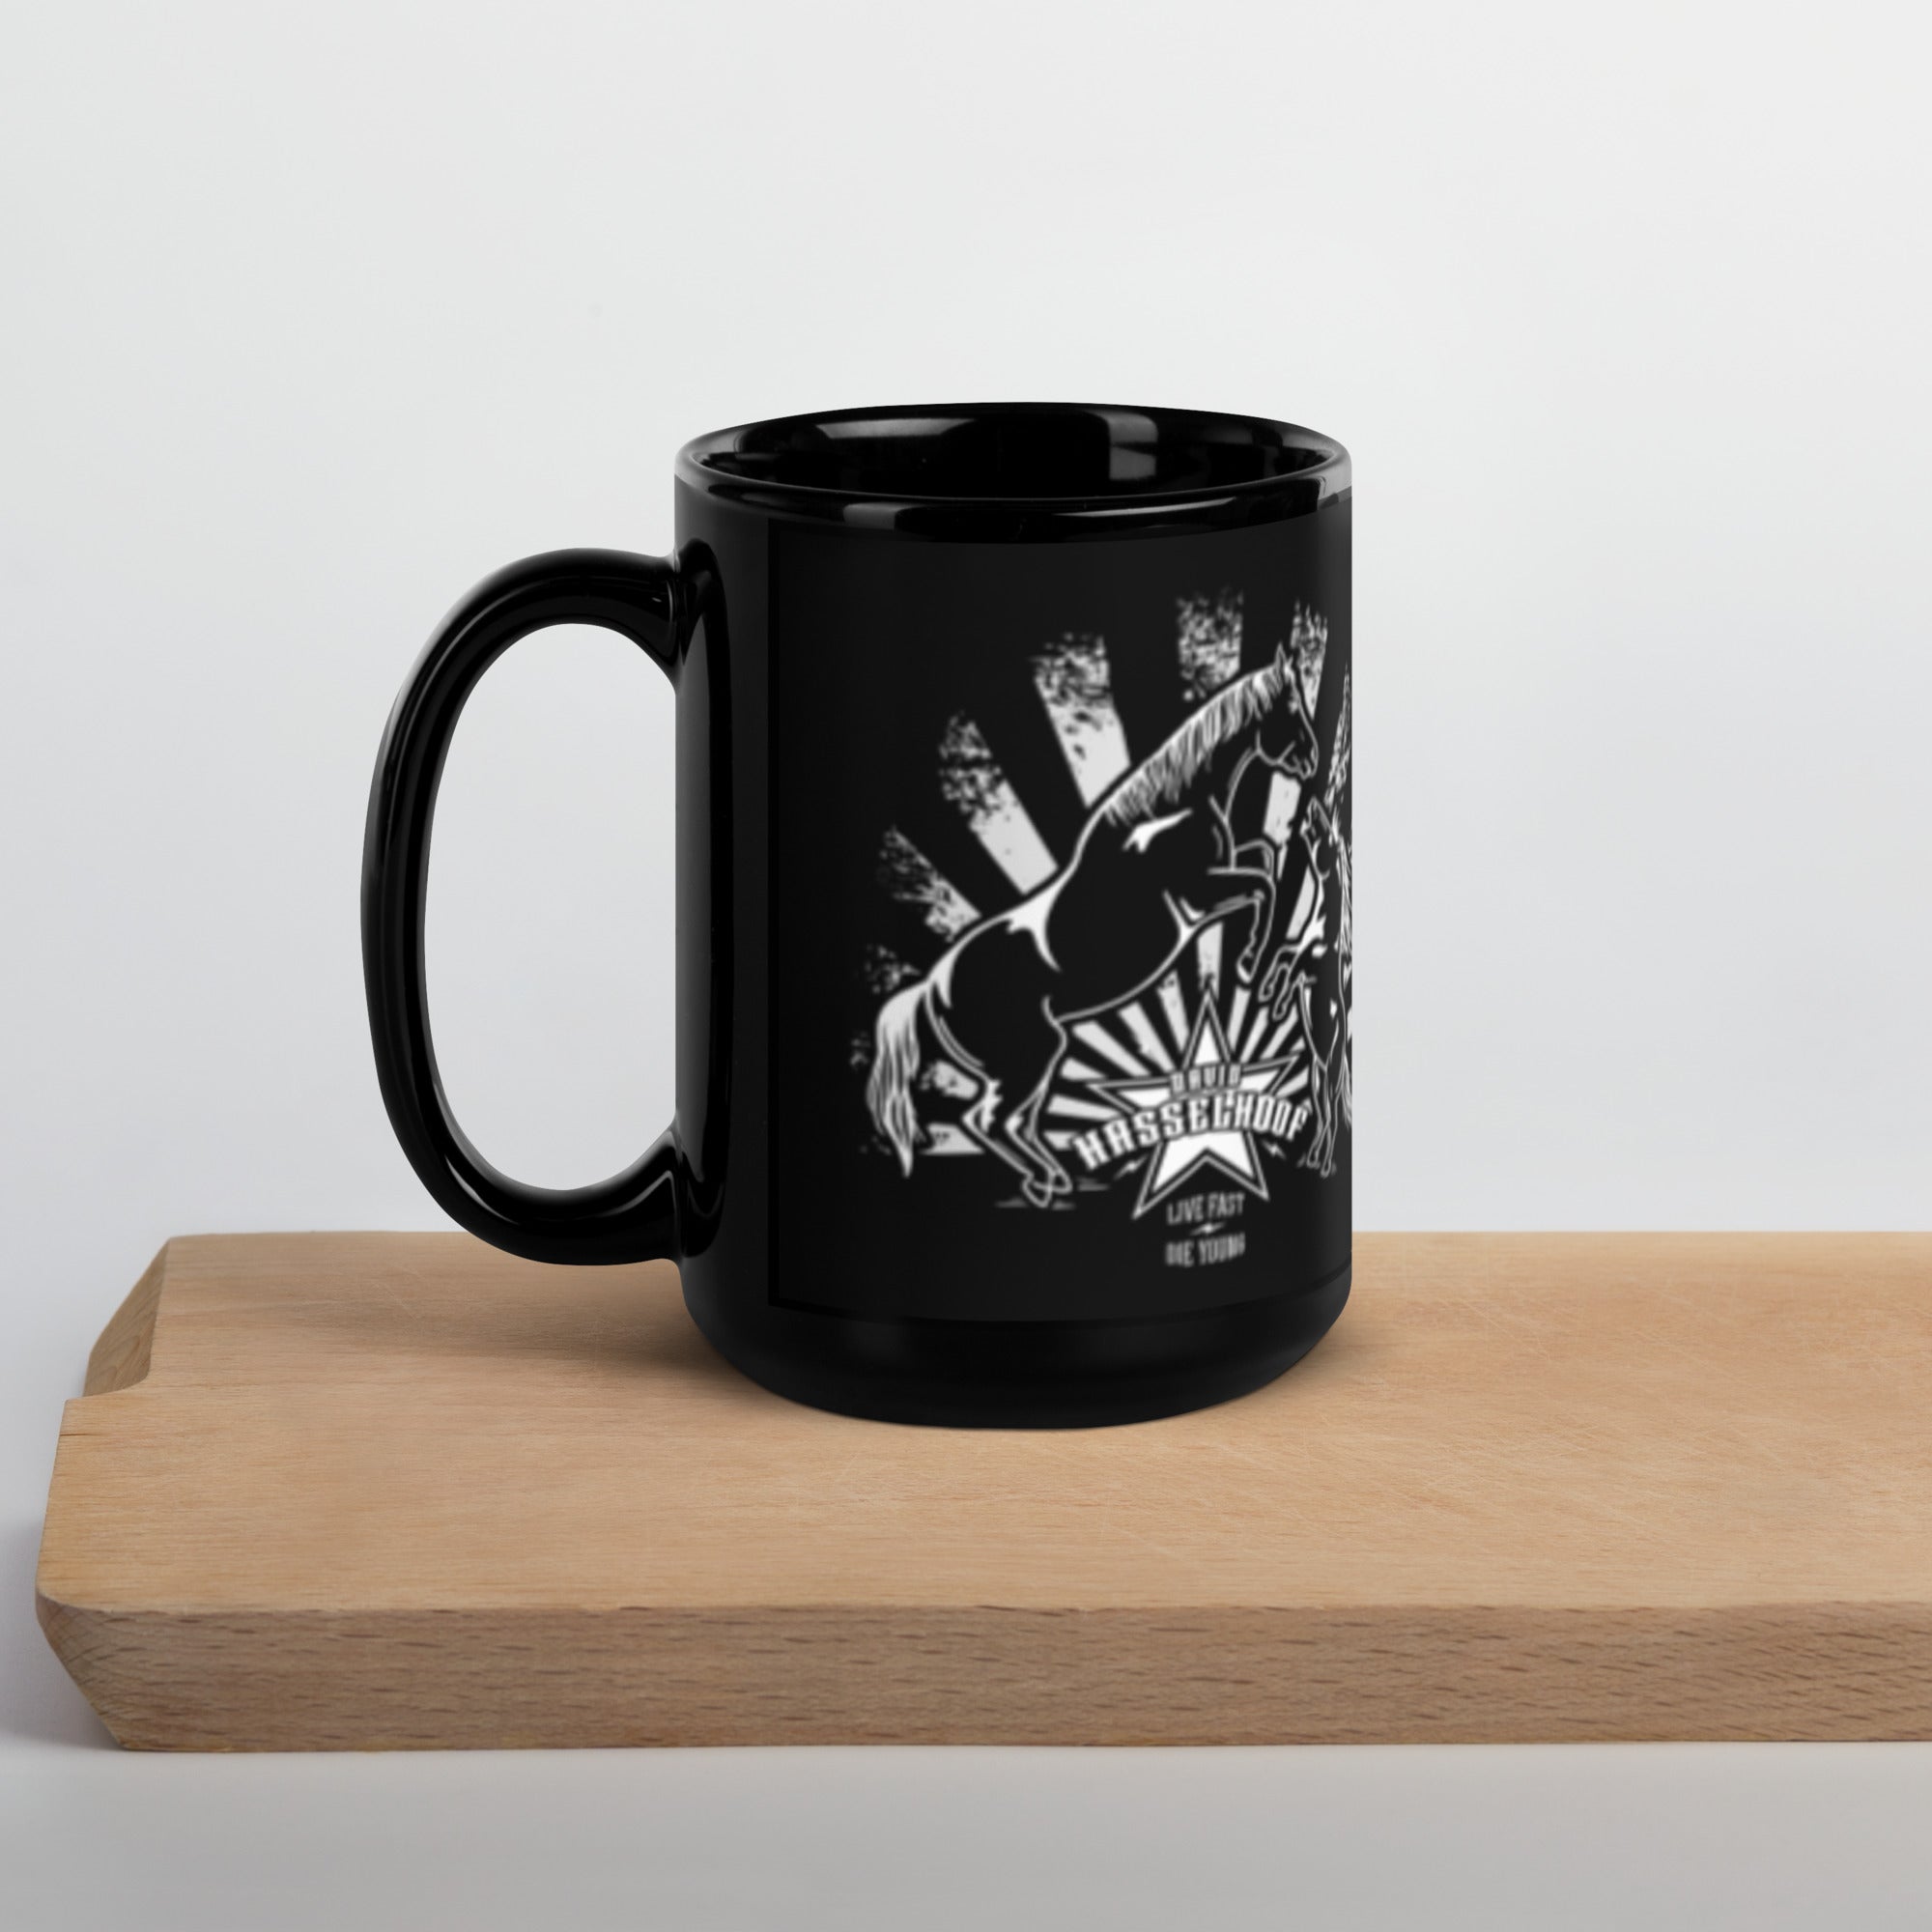 David Hasselhoof Attacks // Coffee Mug